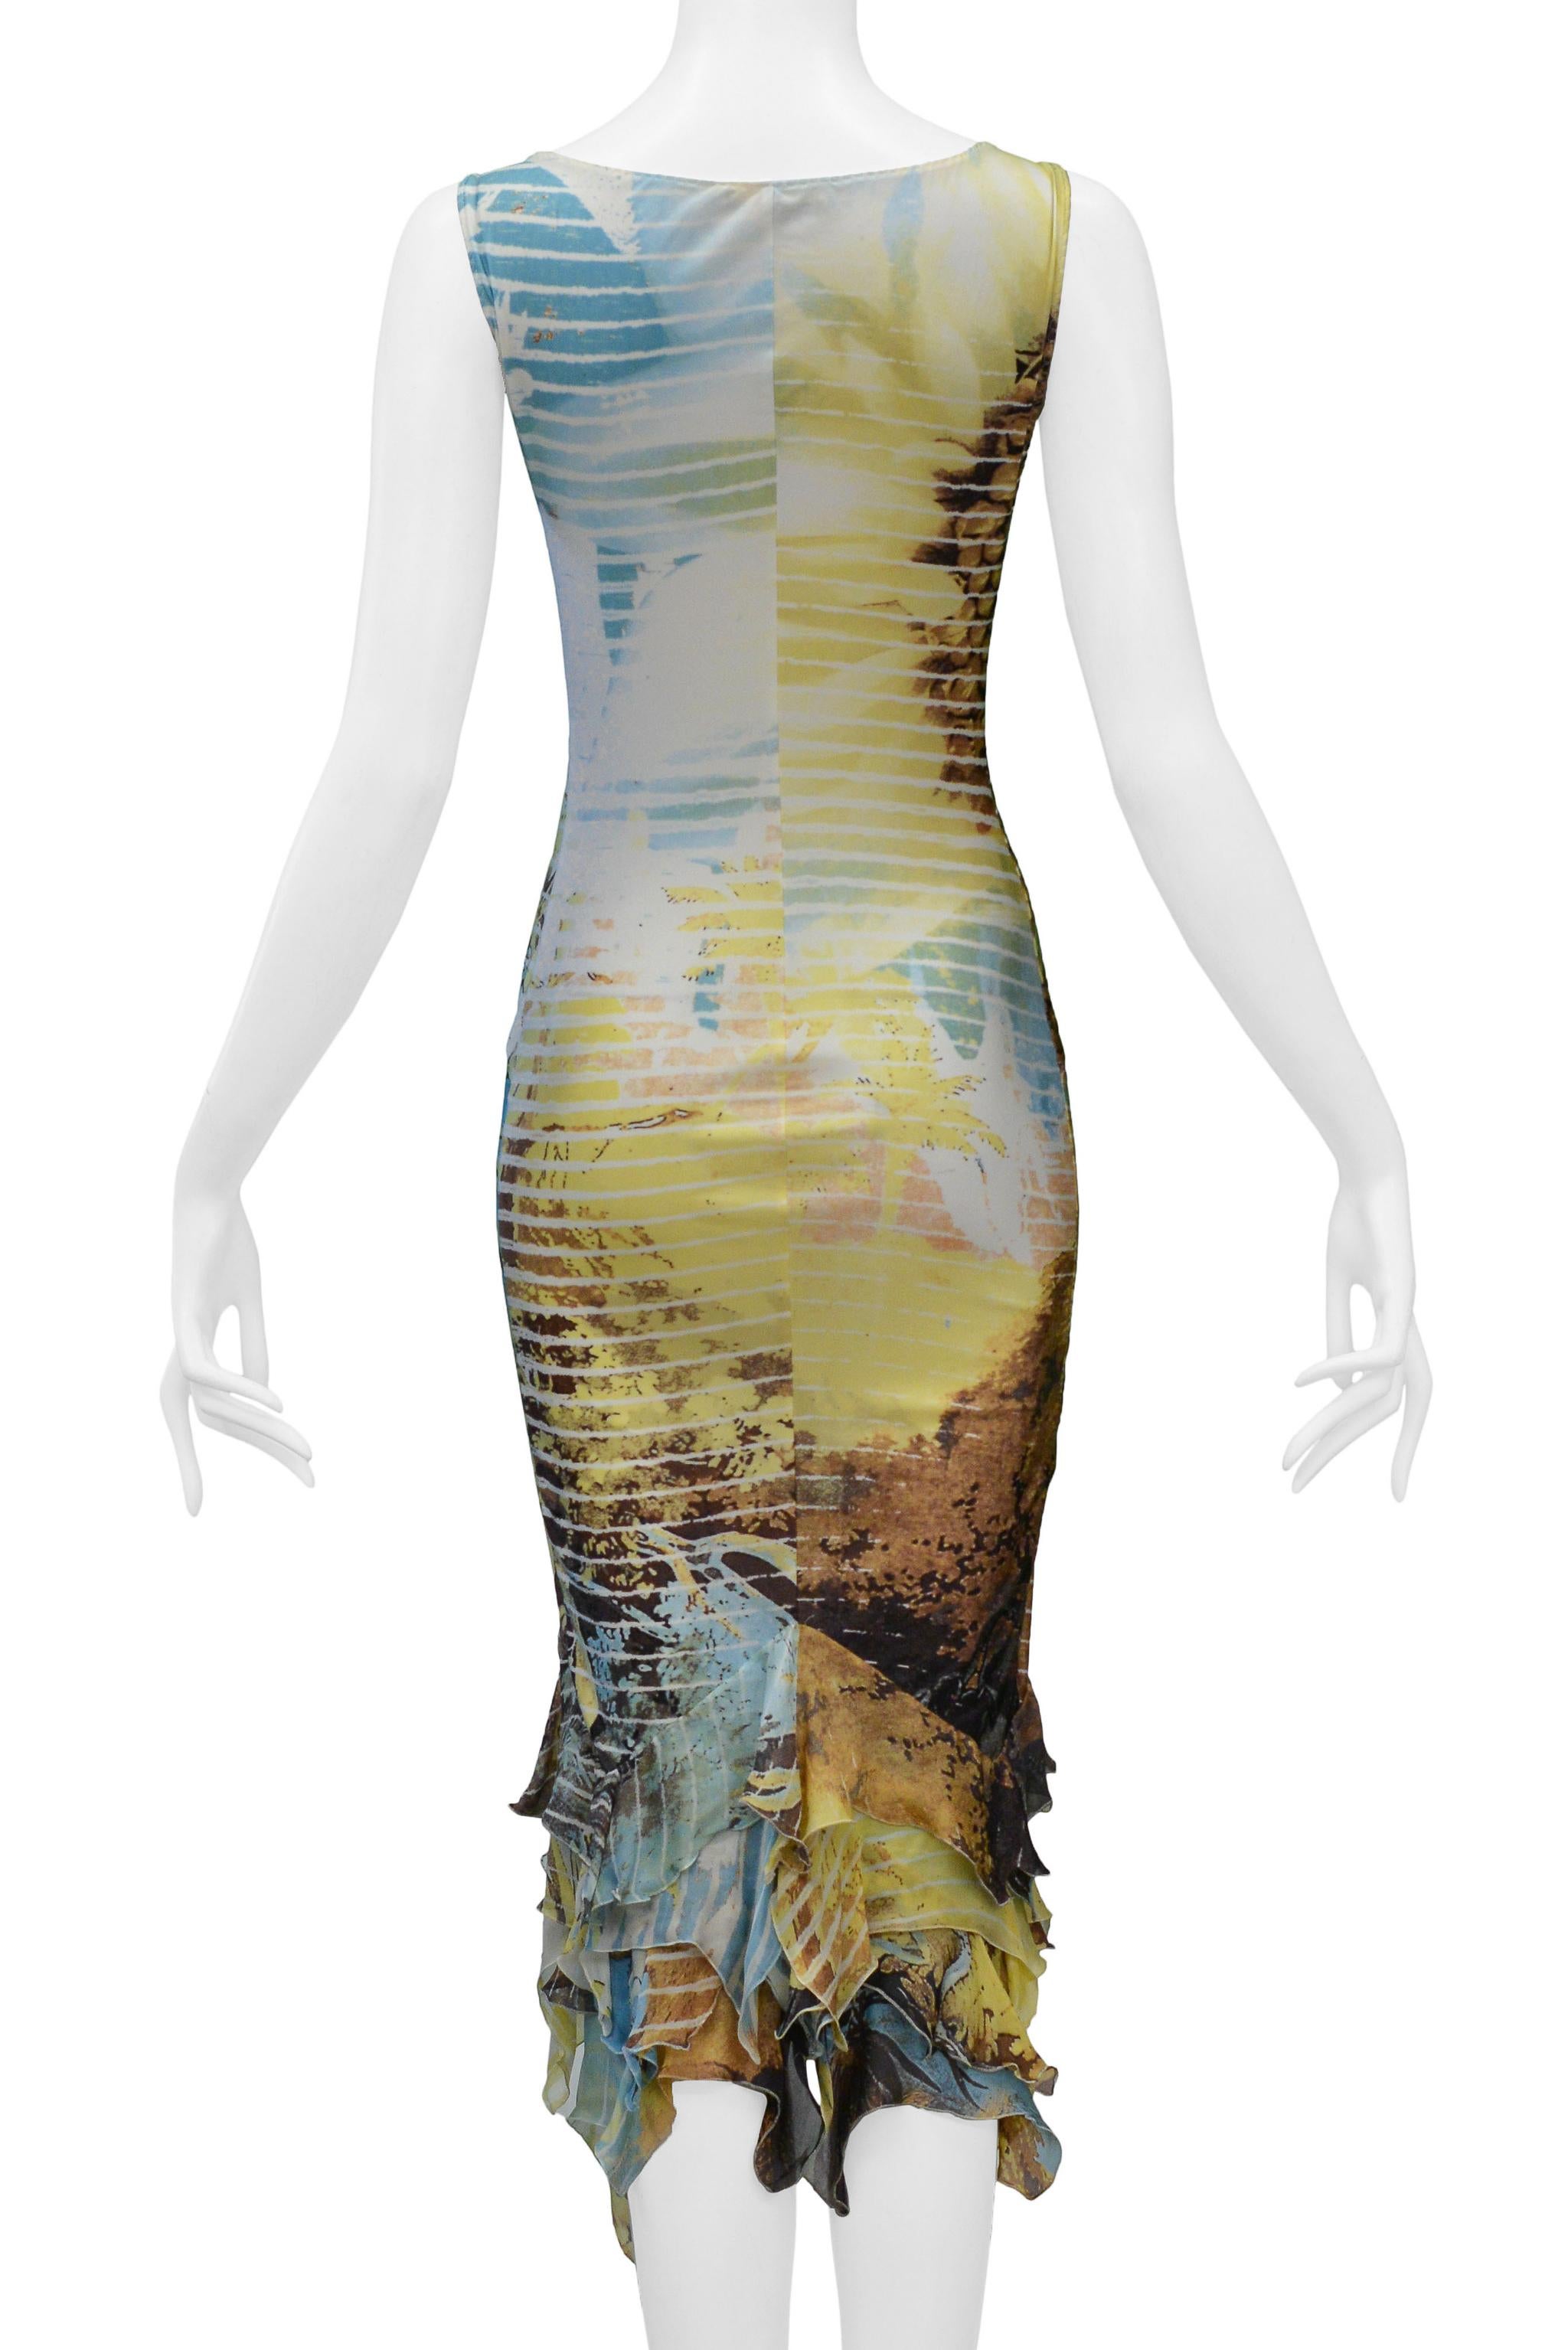 Women's Roberto Cavalli Lion Print Dress With Chiffon Ruffles For Sale